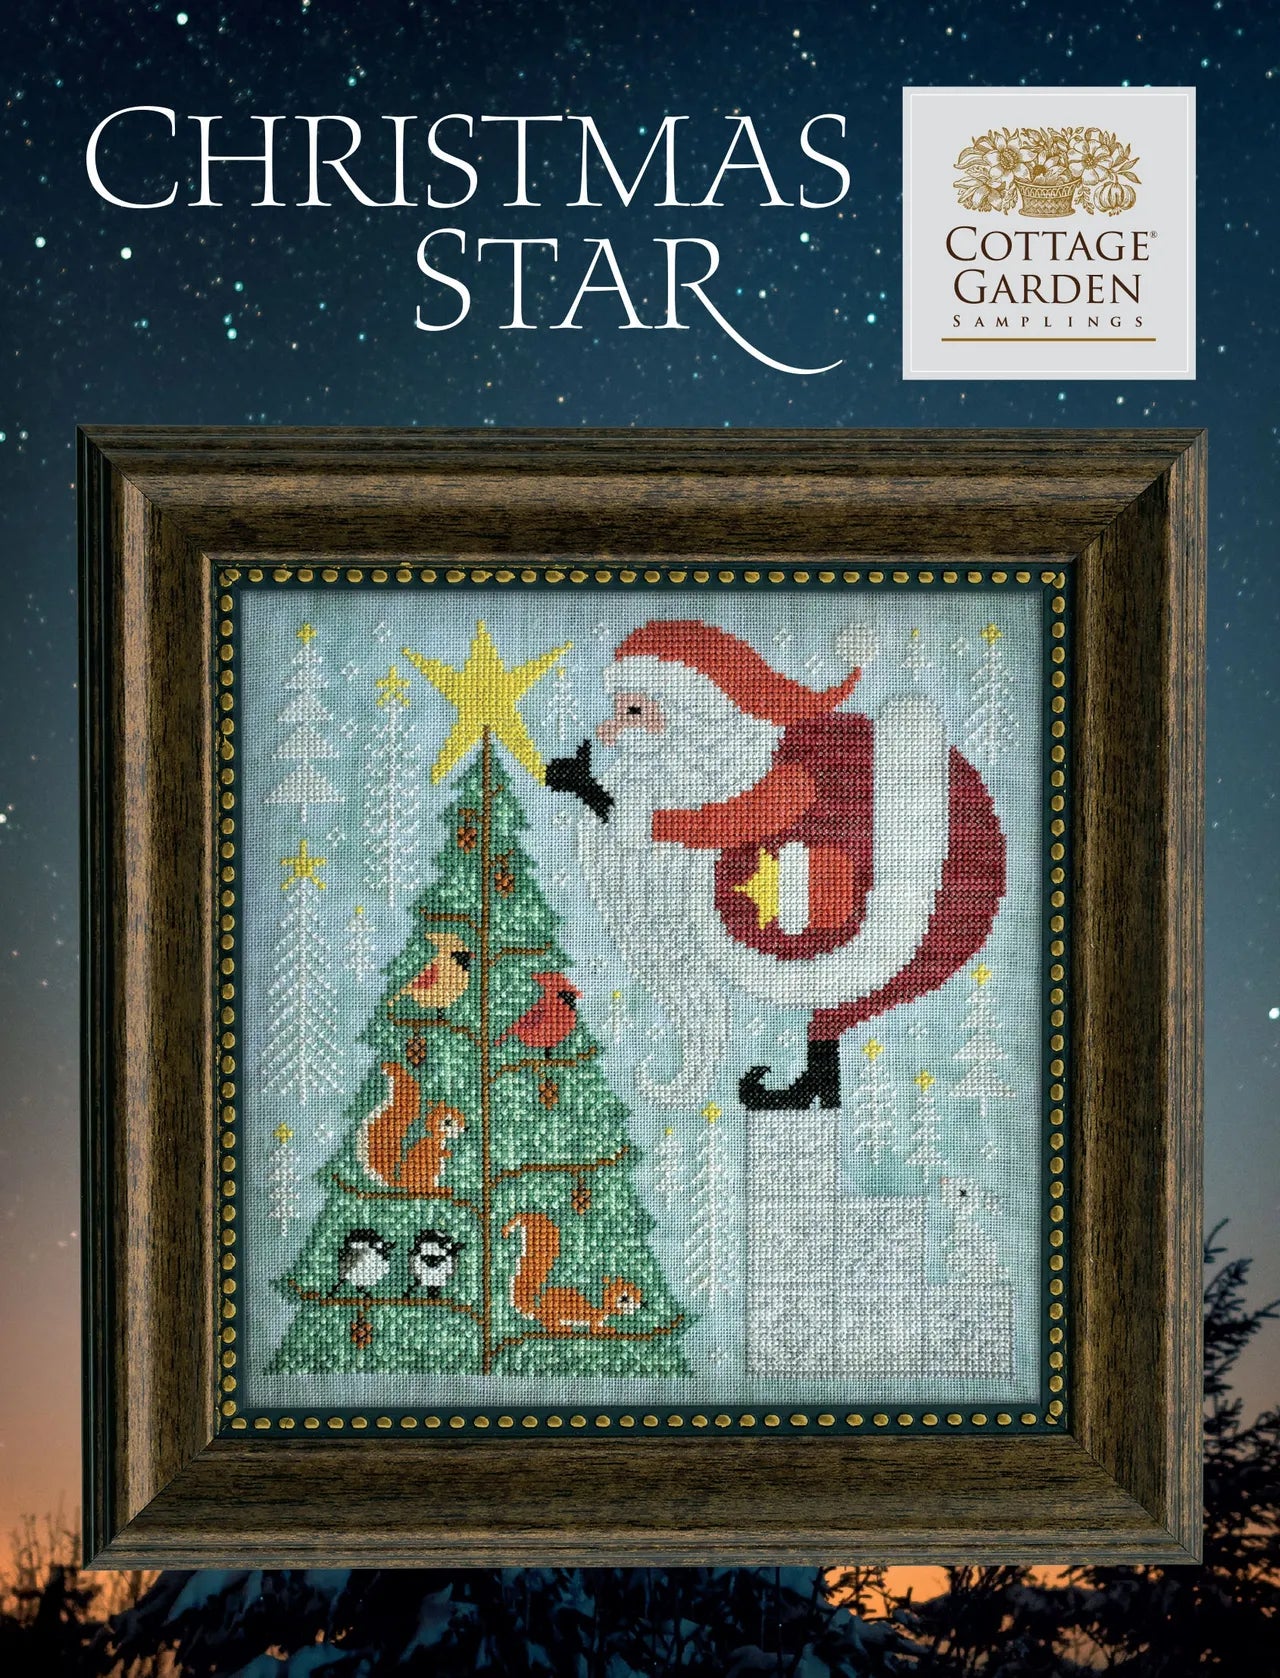 Christmas Star - Cottage Garden Samplings - Cross Stitch Pattern, Needlecraft Patterns, Needlecraft Patterns, The Crafty Grimalkin - A Cross Stitch Store